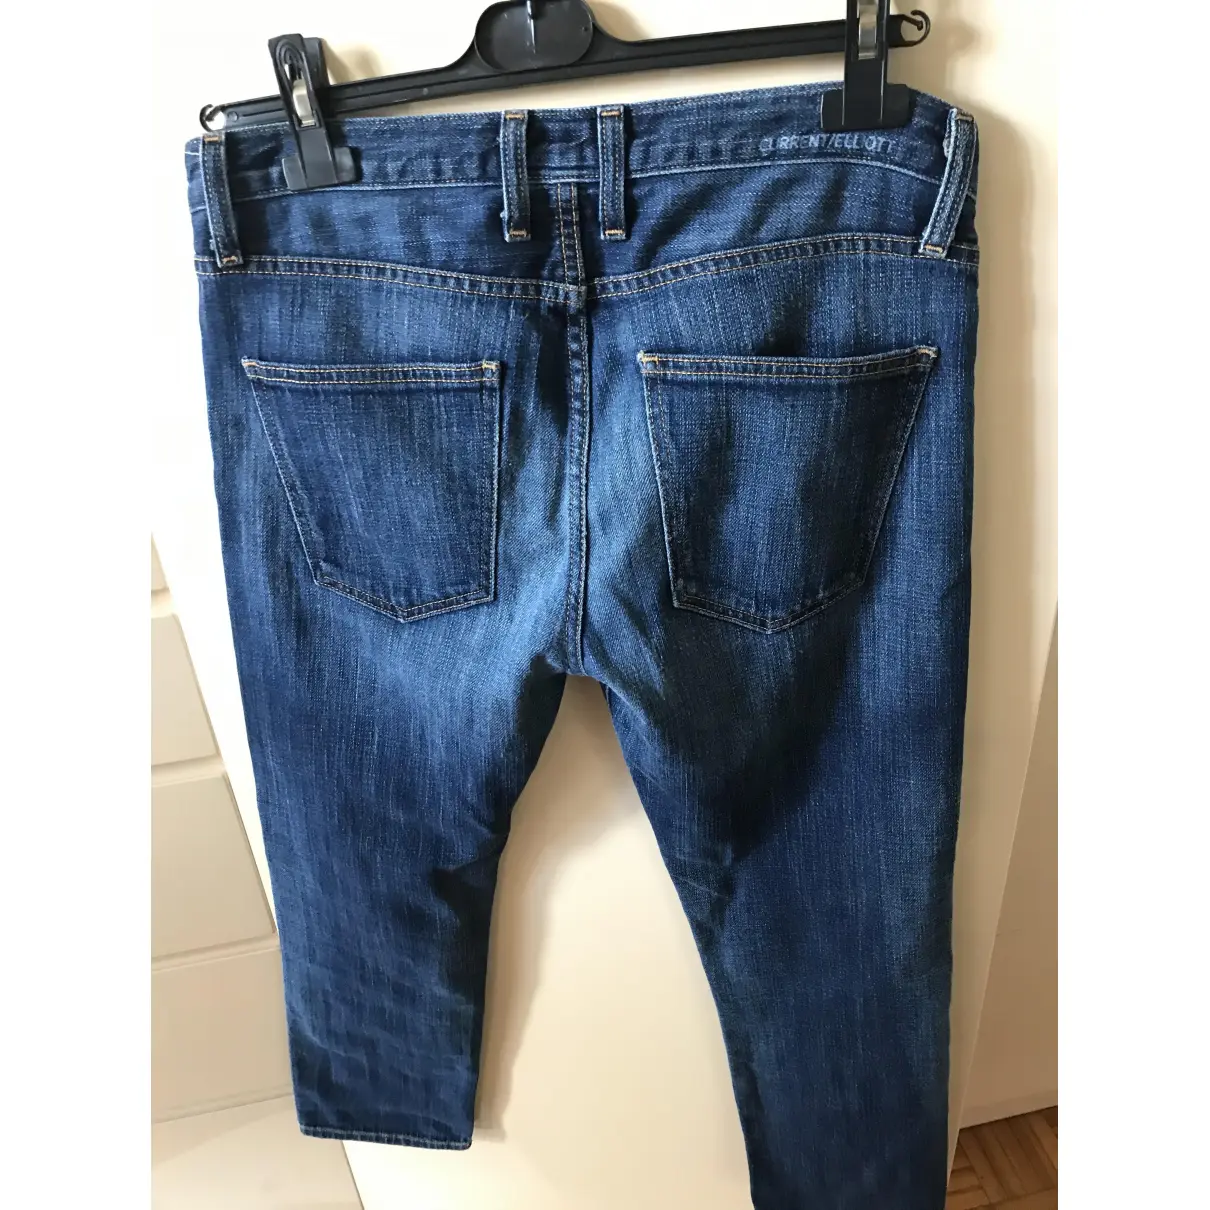 Buy Current Elliott Straight jeans online